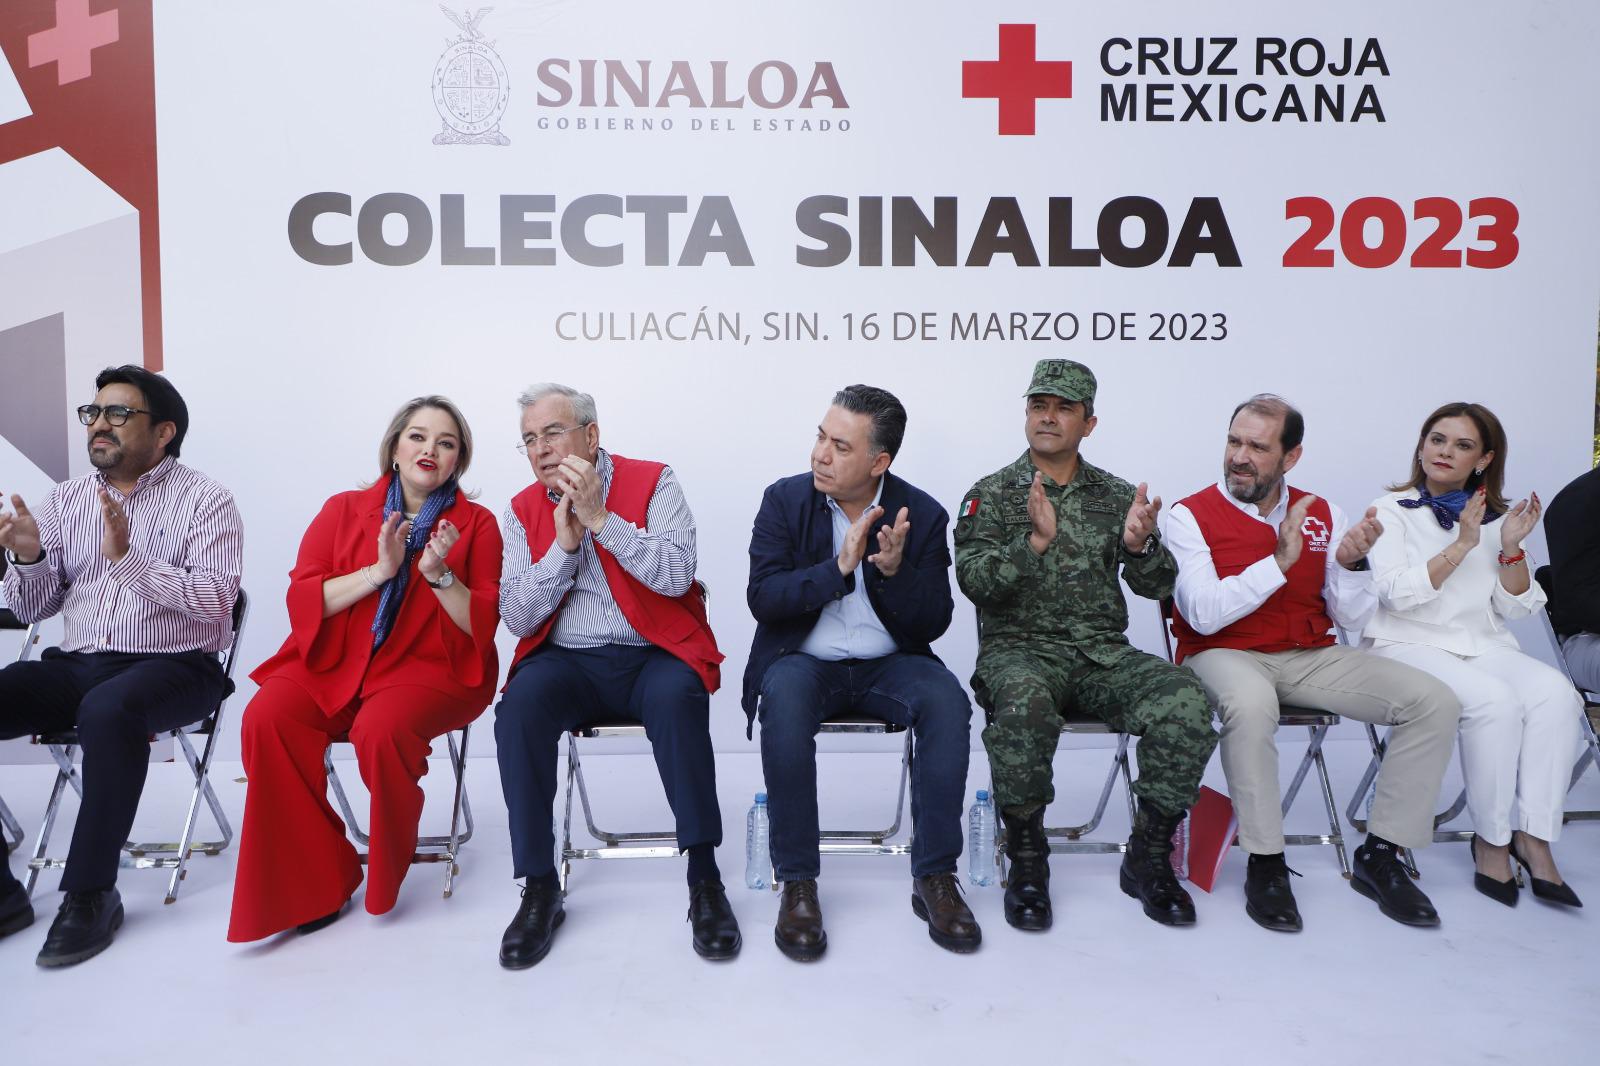 $!Arranca colecta 2023 de Cruz Roja; van por $40 millones en Sinaloa